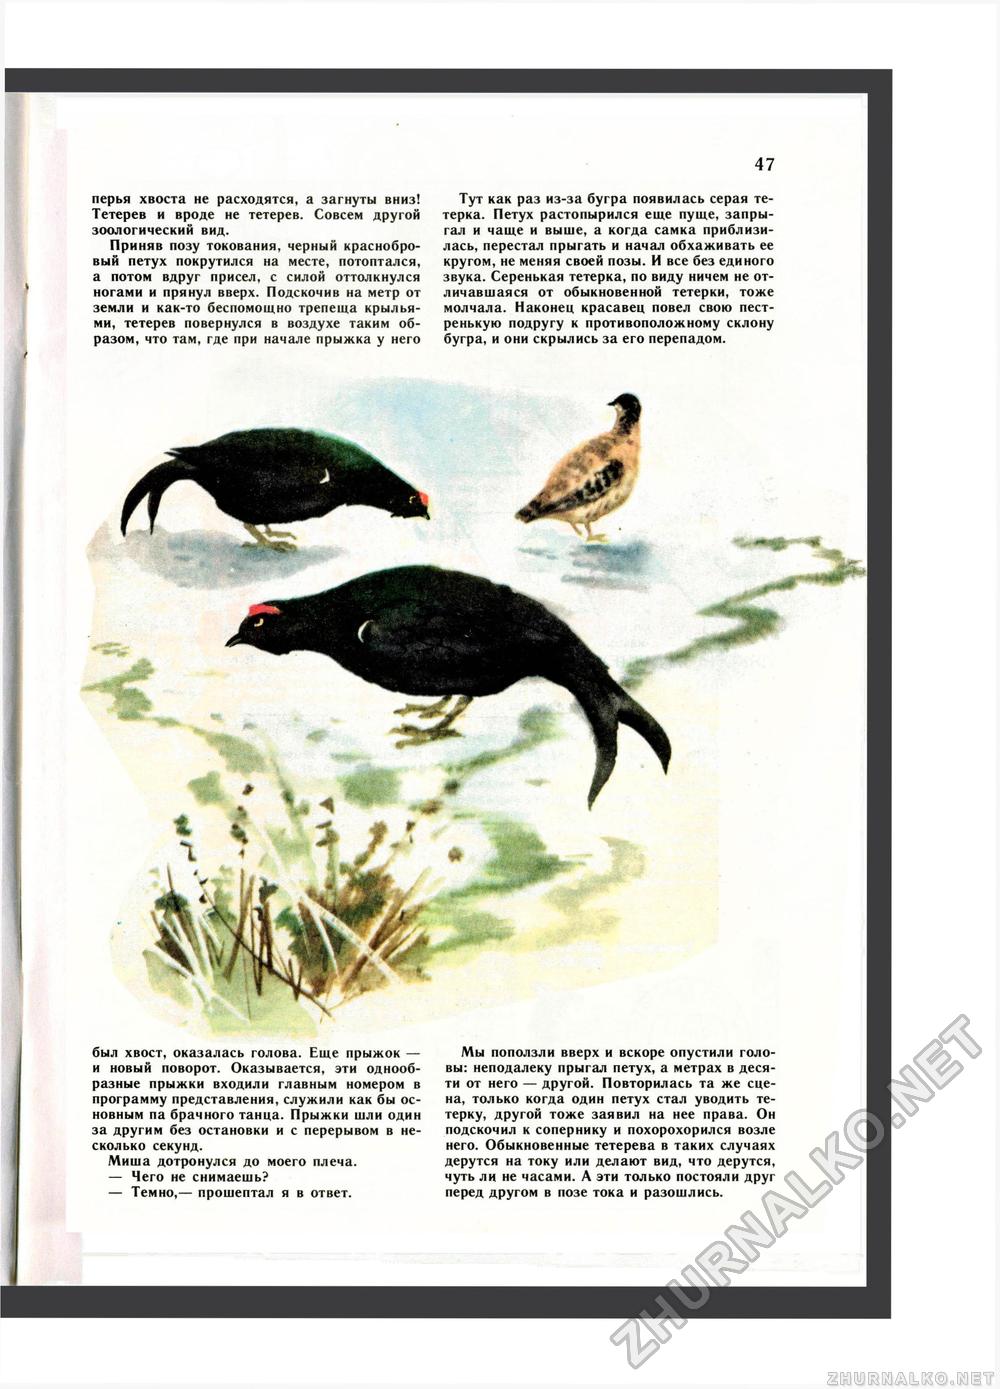 Юный Натуралист 1987-11, страница 49